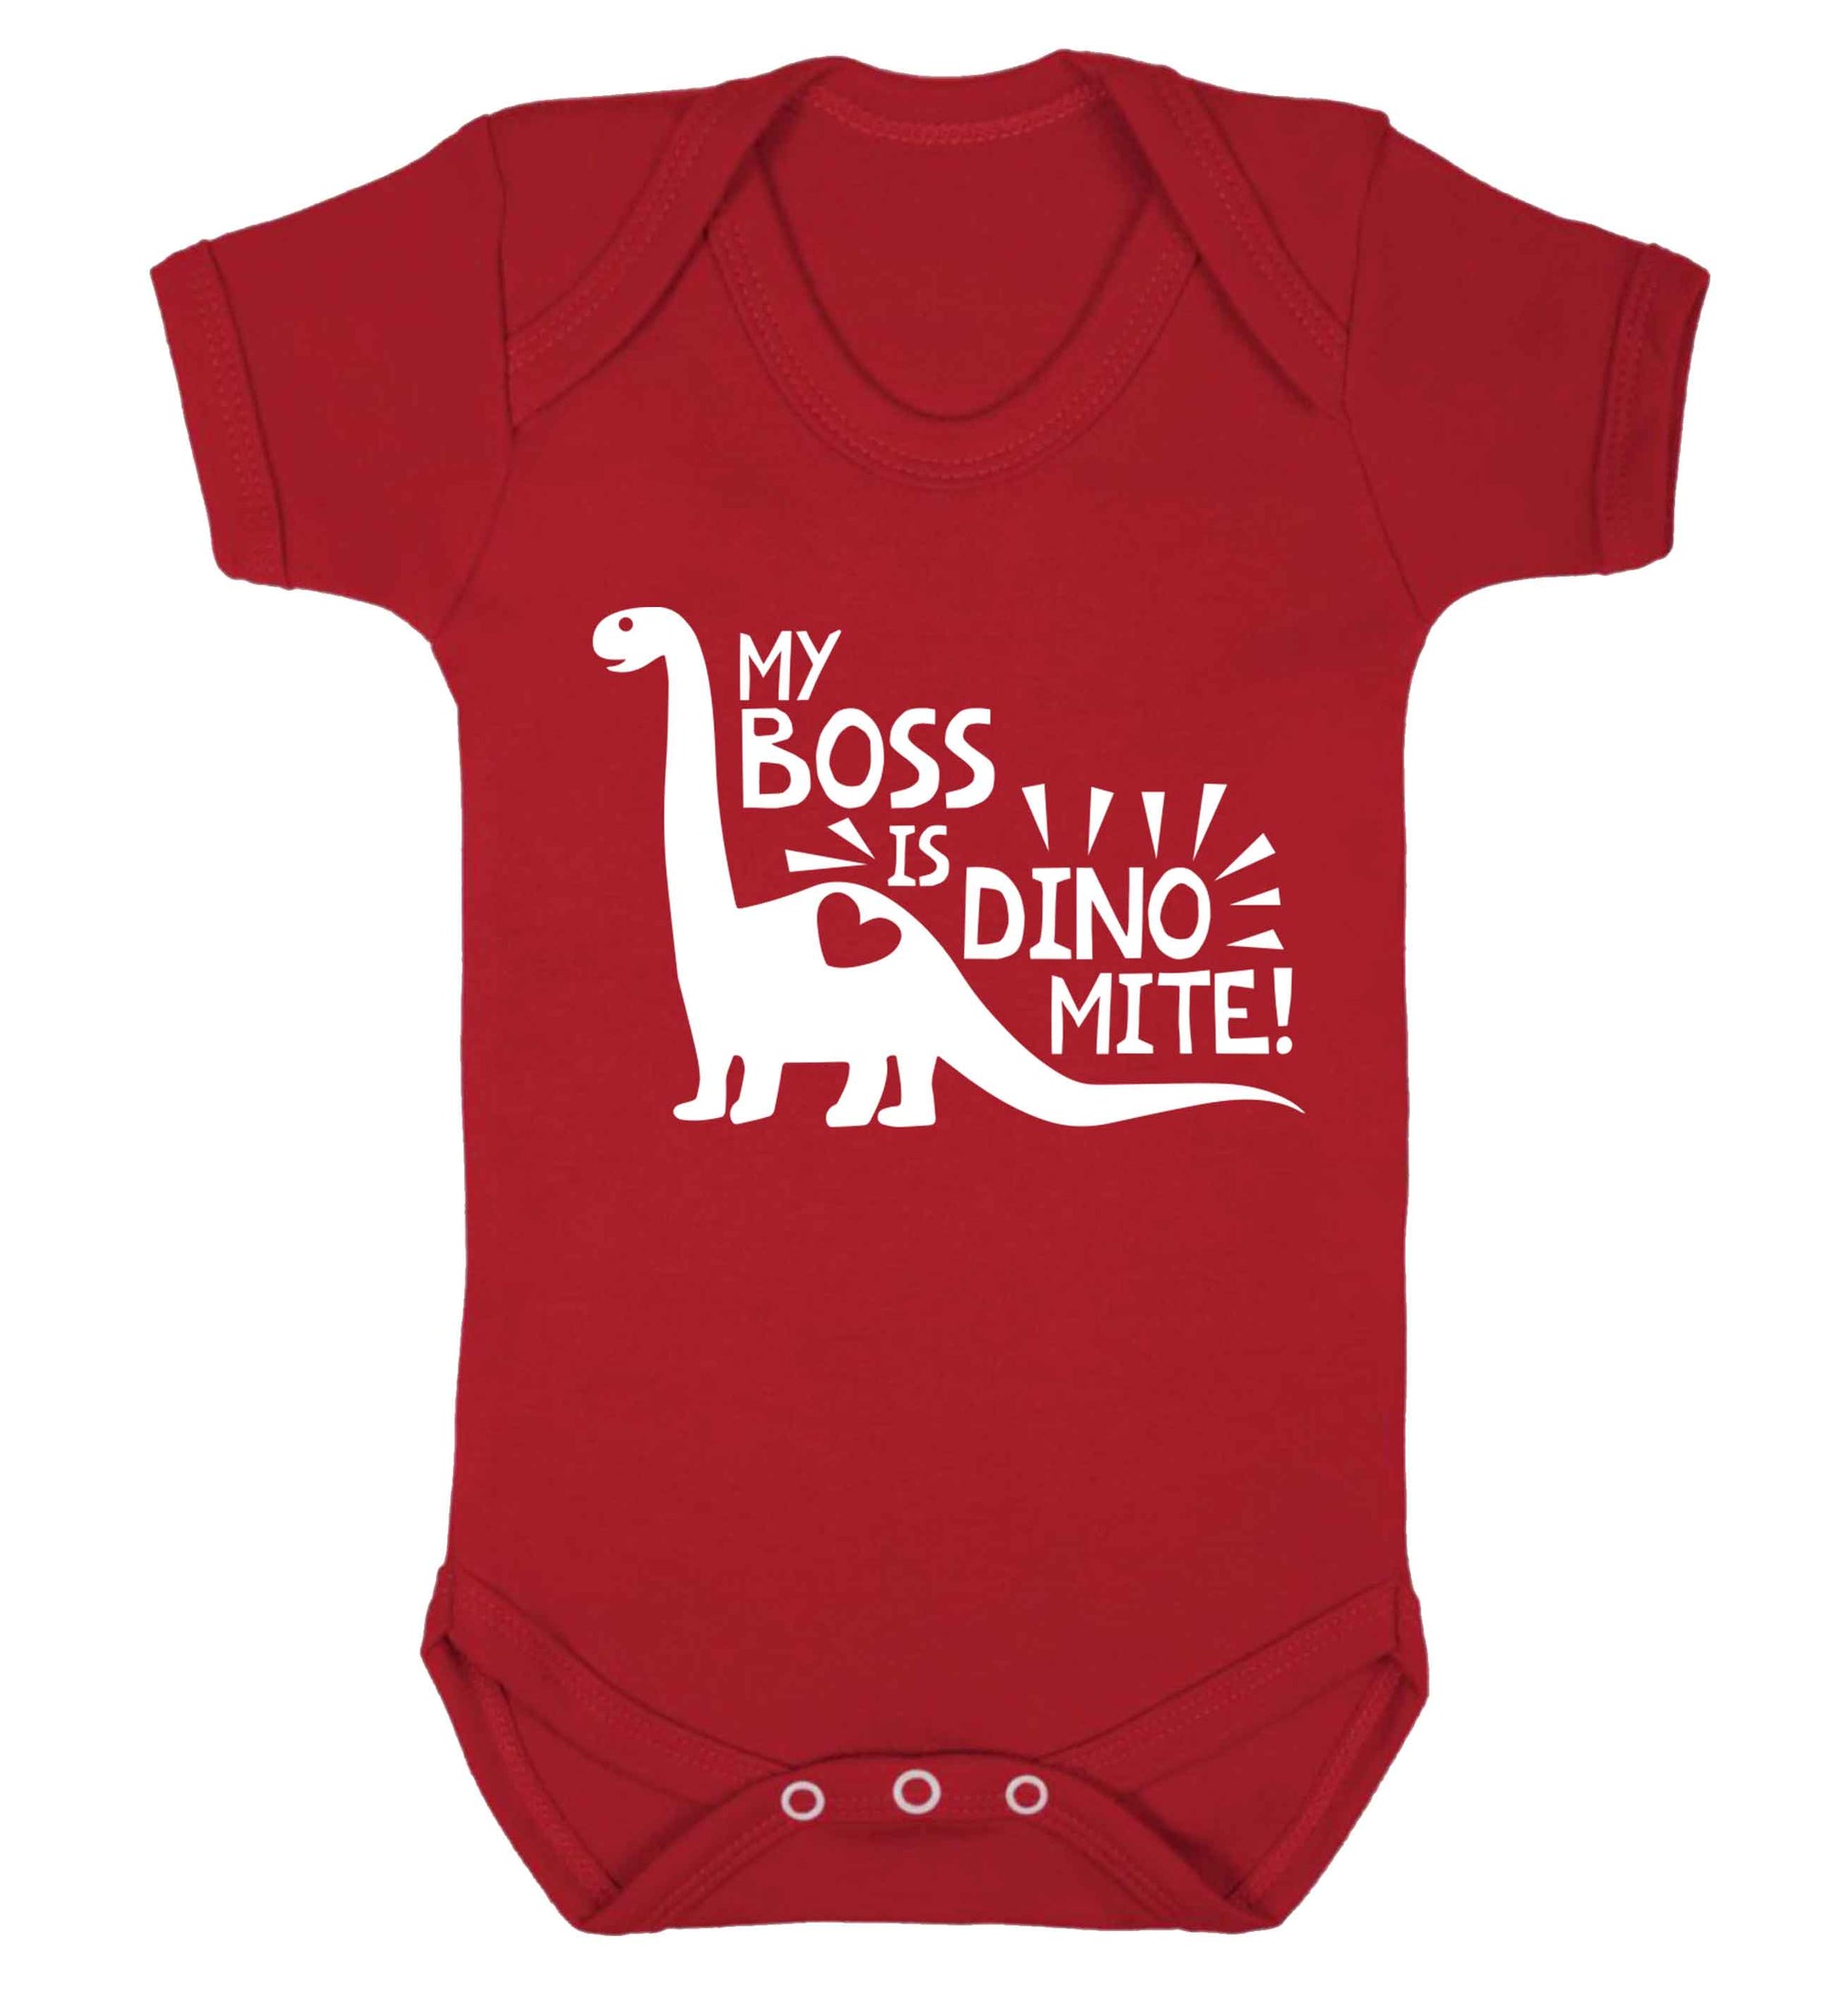 My boss is dinomite! Baby Vest red 18-24 months